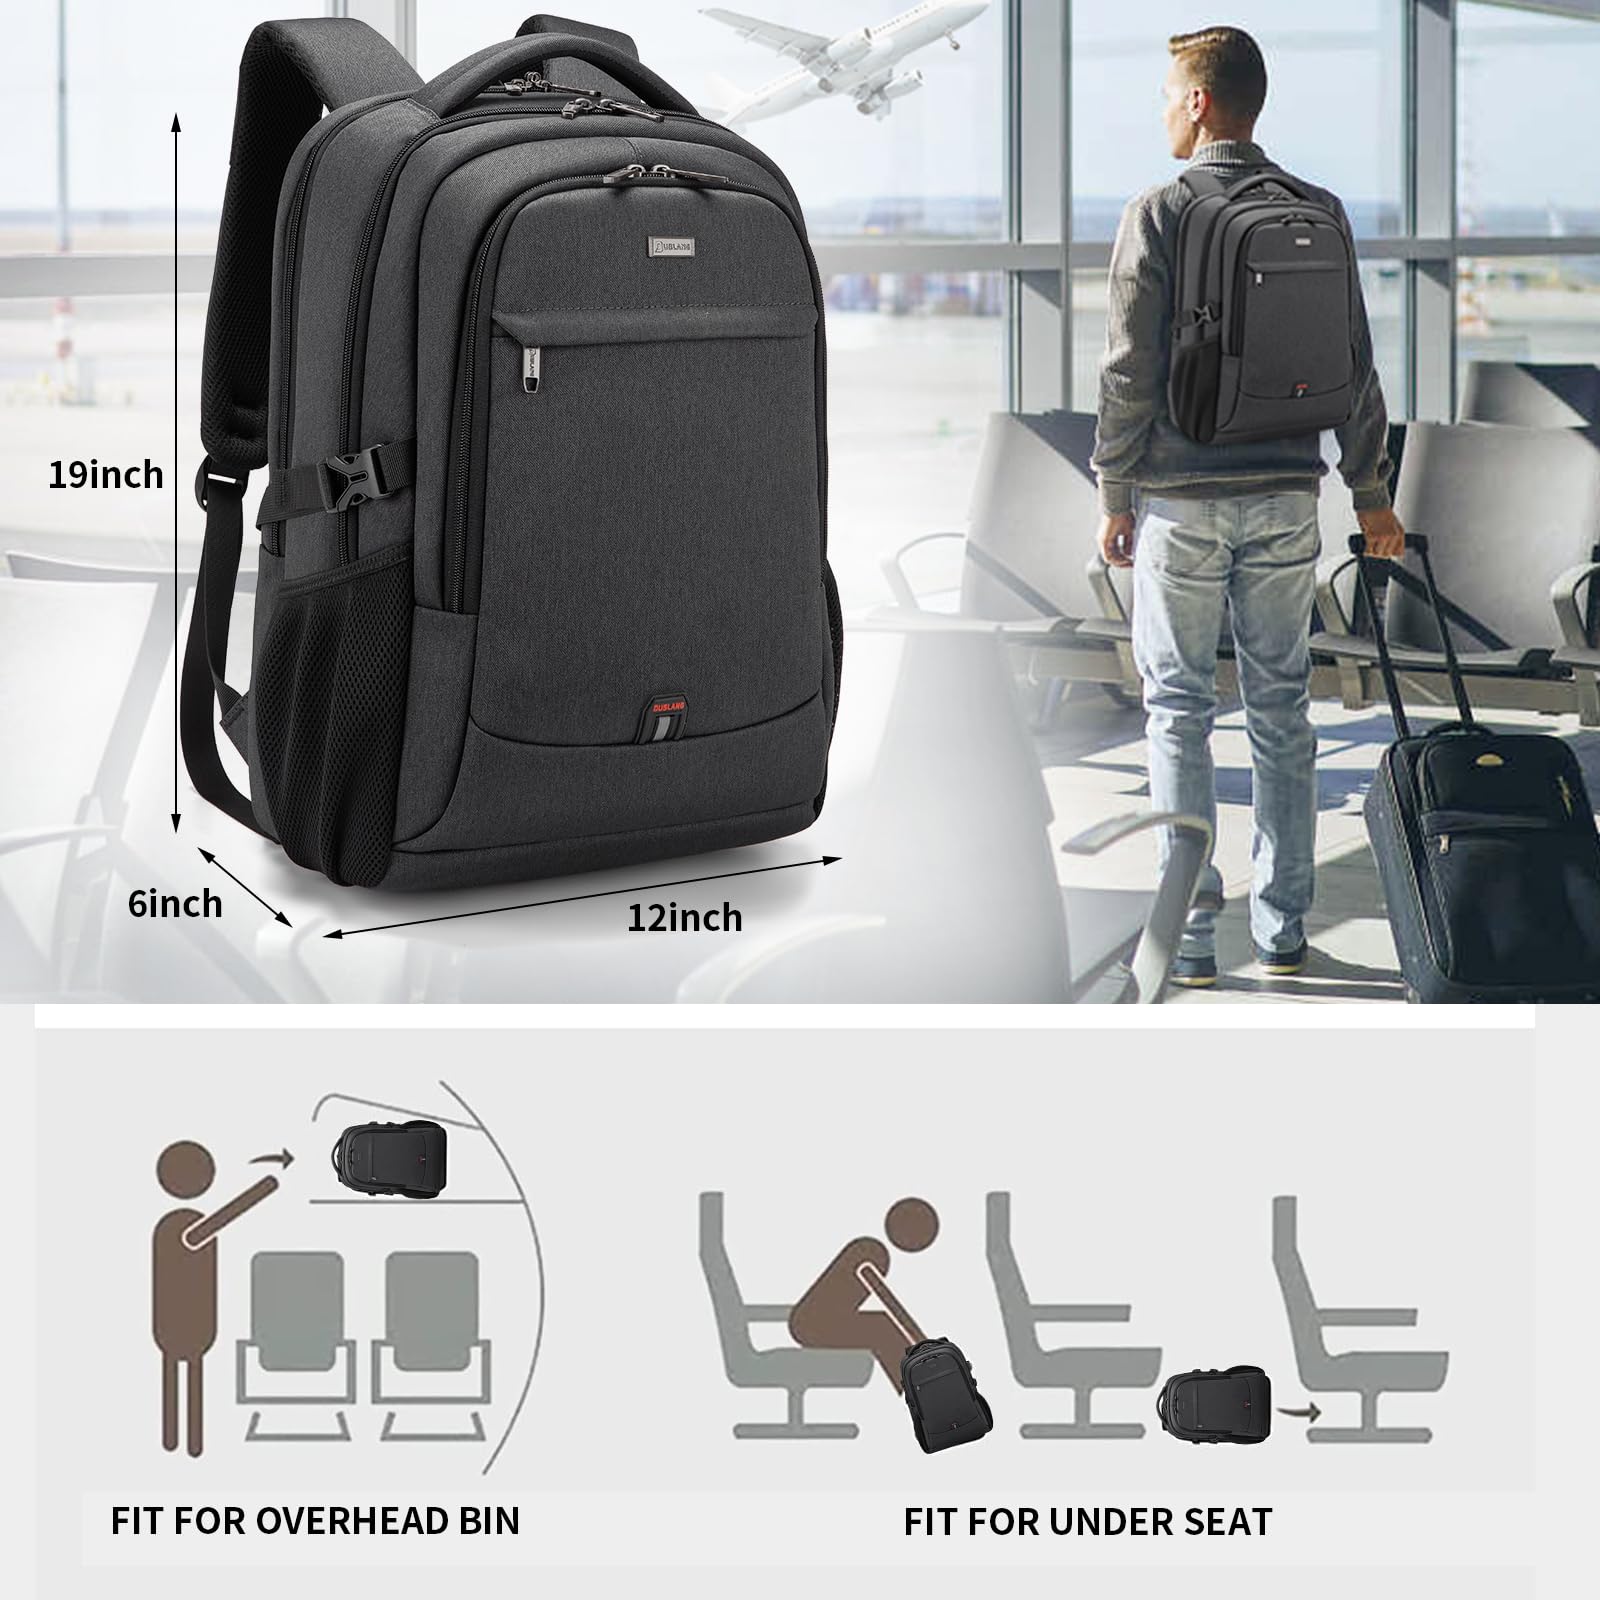 DUSLANG 17 Inch Laptop Backpack for Travel Water Resistant College Backpack for Men Laptop Bag with USB Charging Port,Black